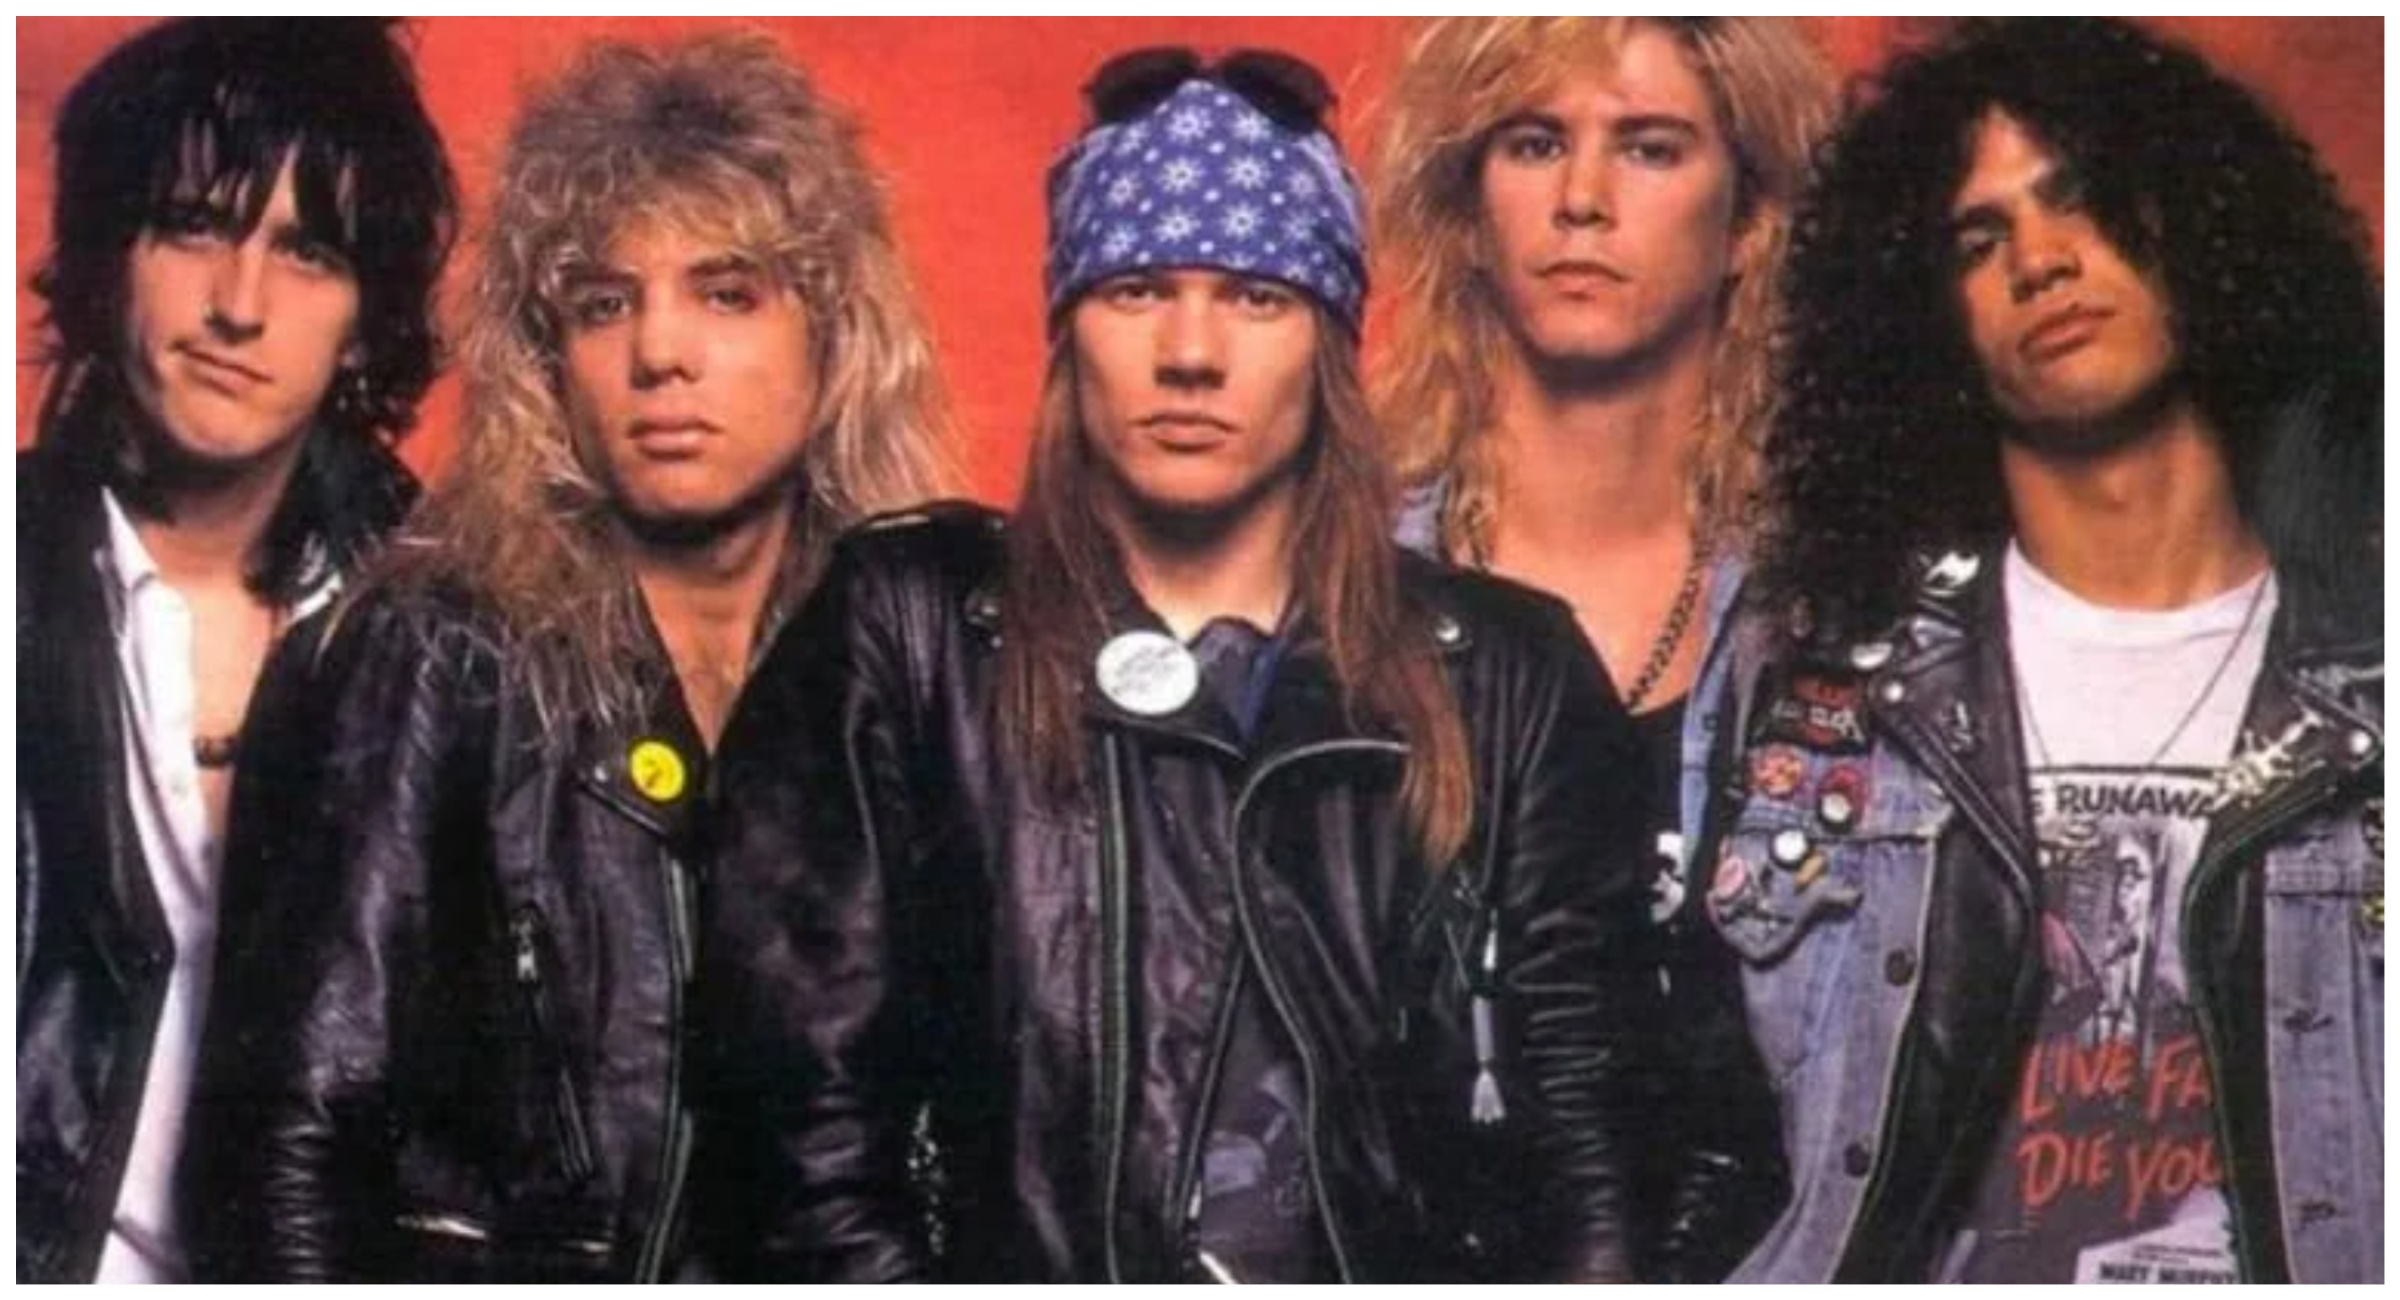 Steven Adler with his bandmates before his dismissal from Guns N' Roses